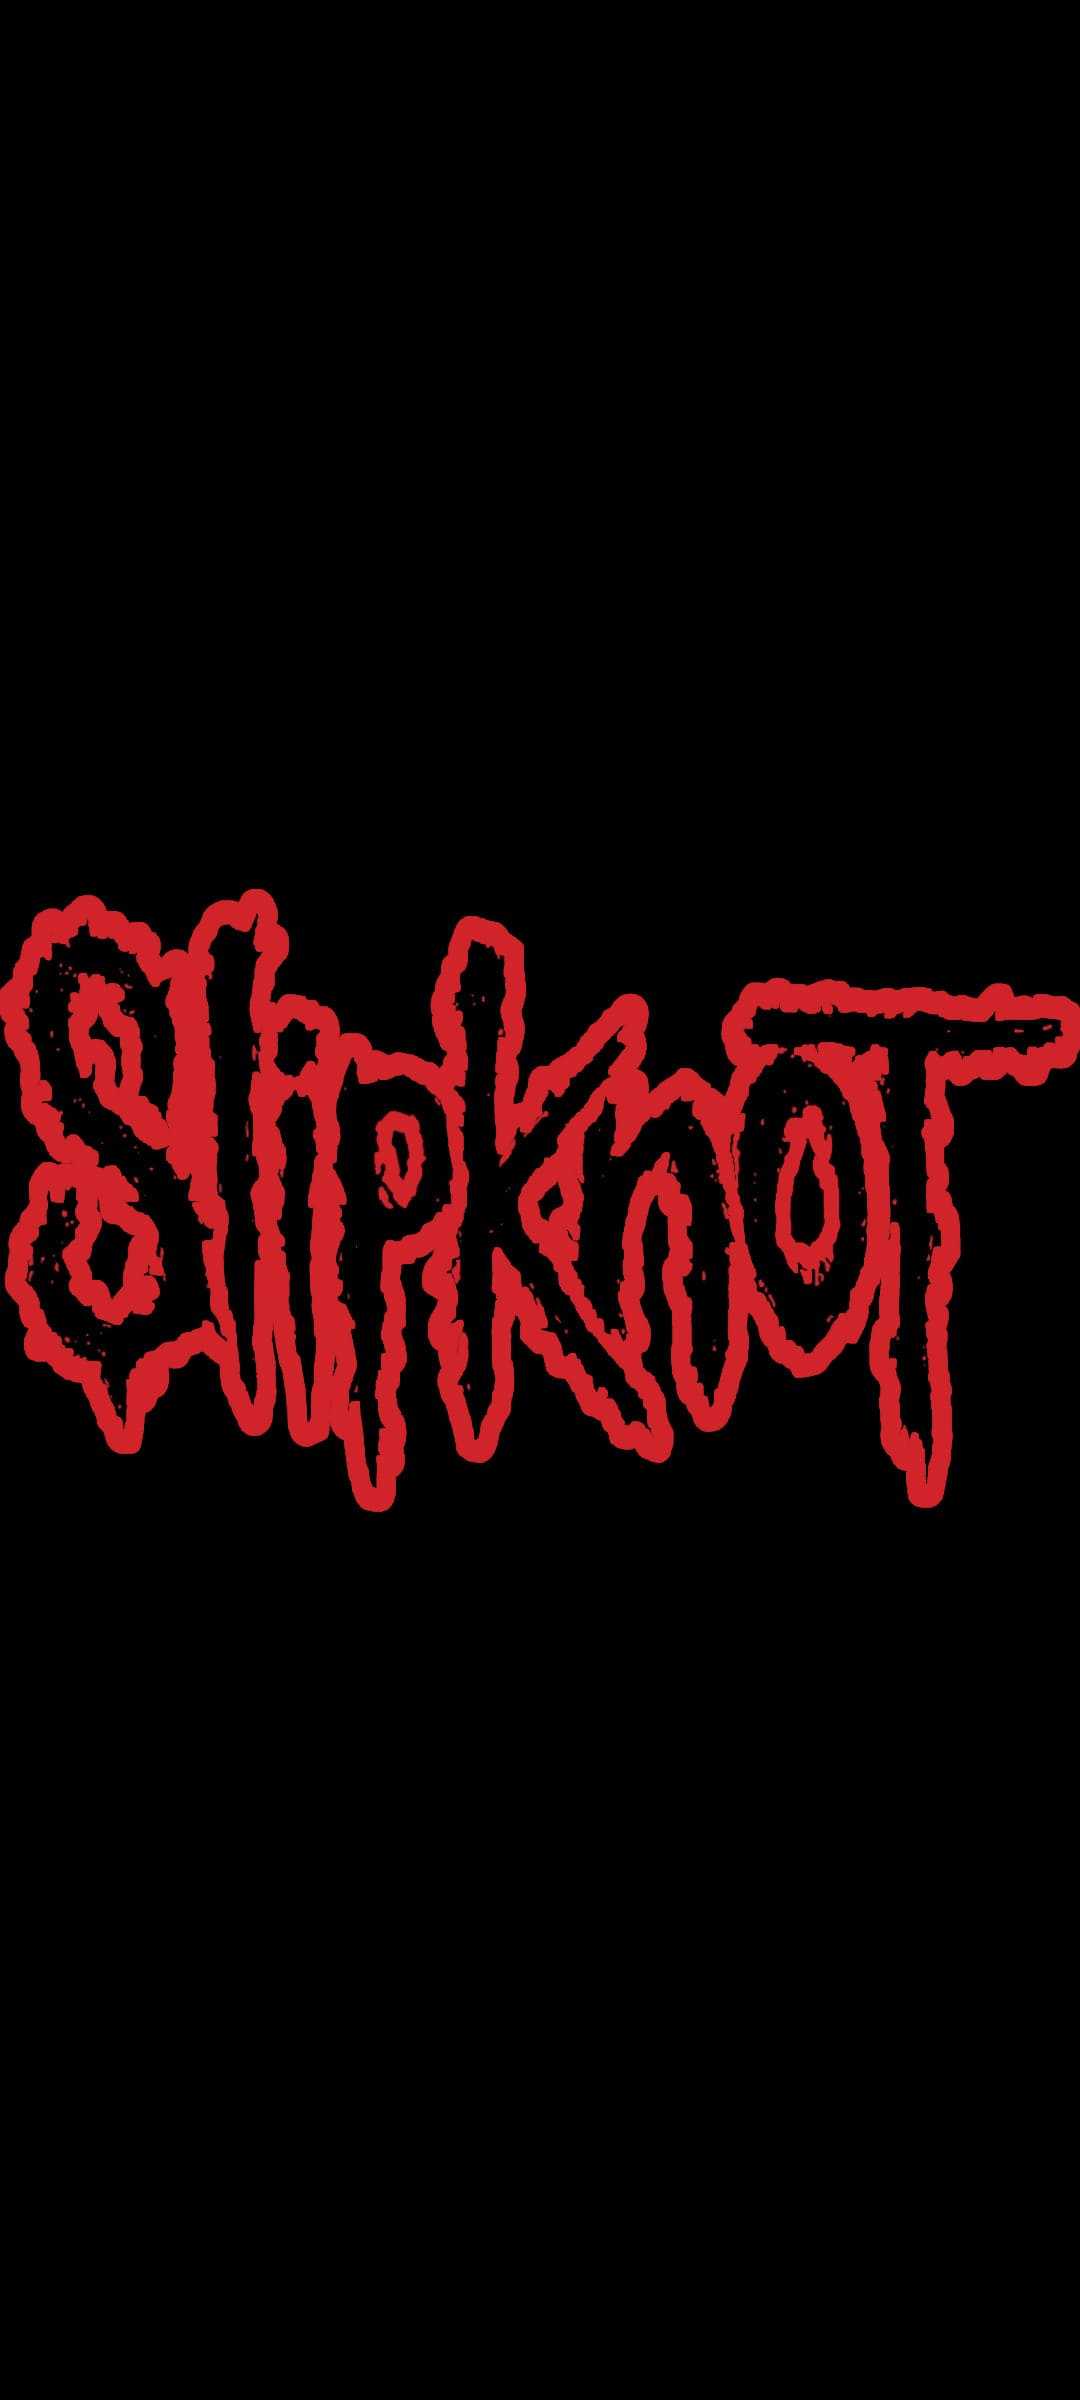 Slipknot Wallpaper - iXpap